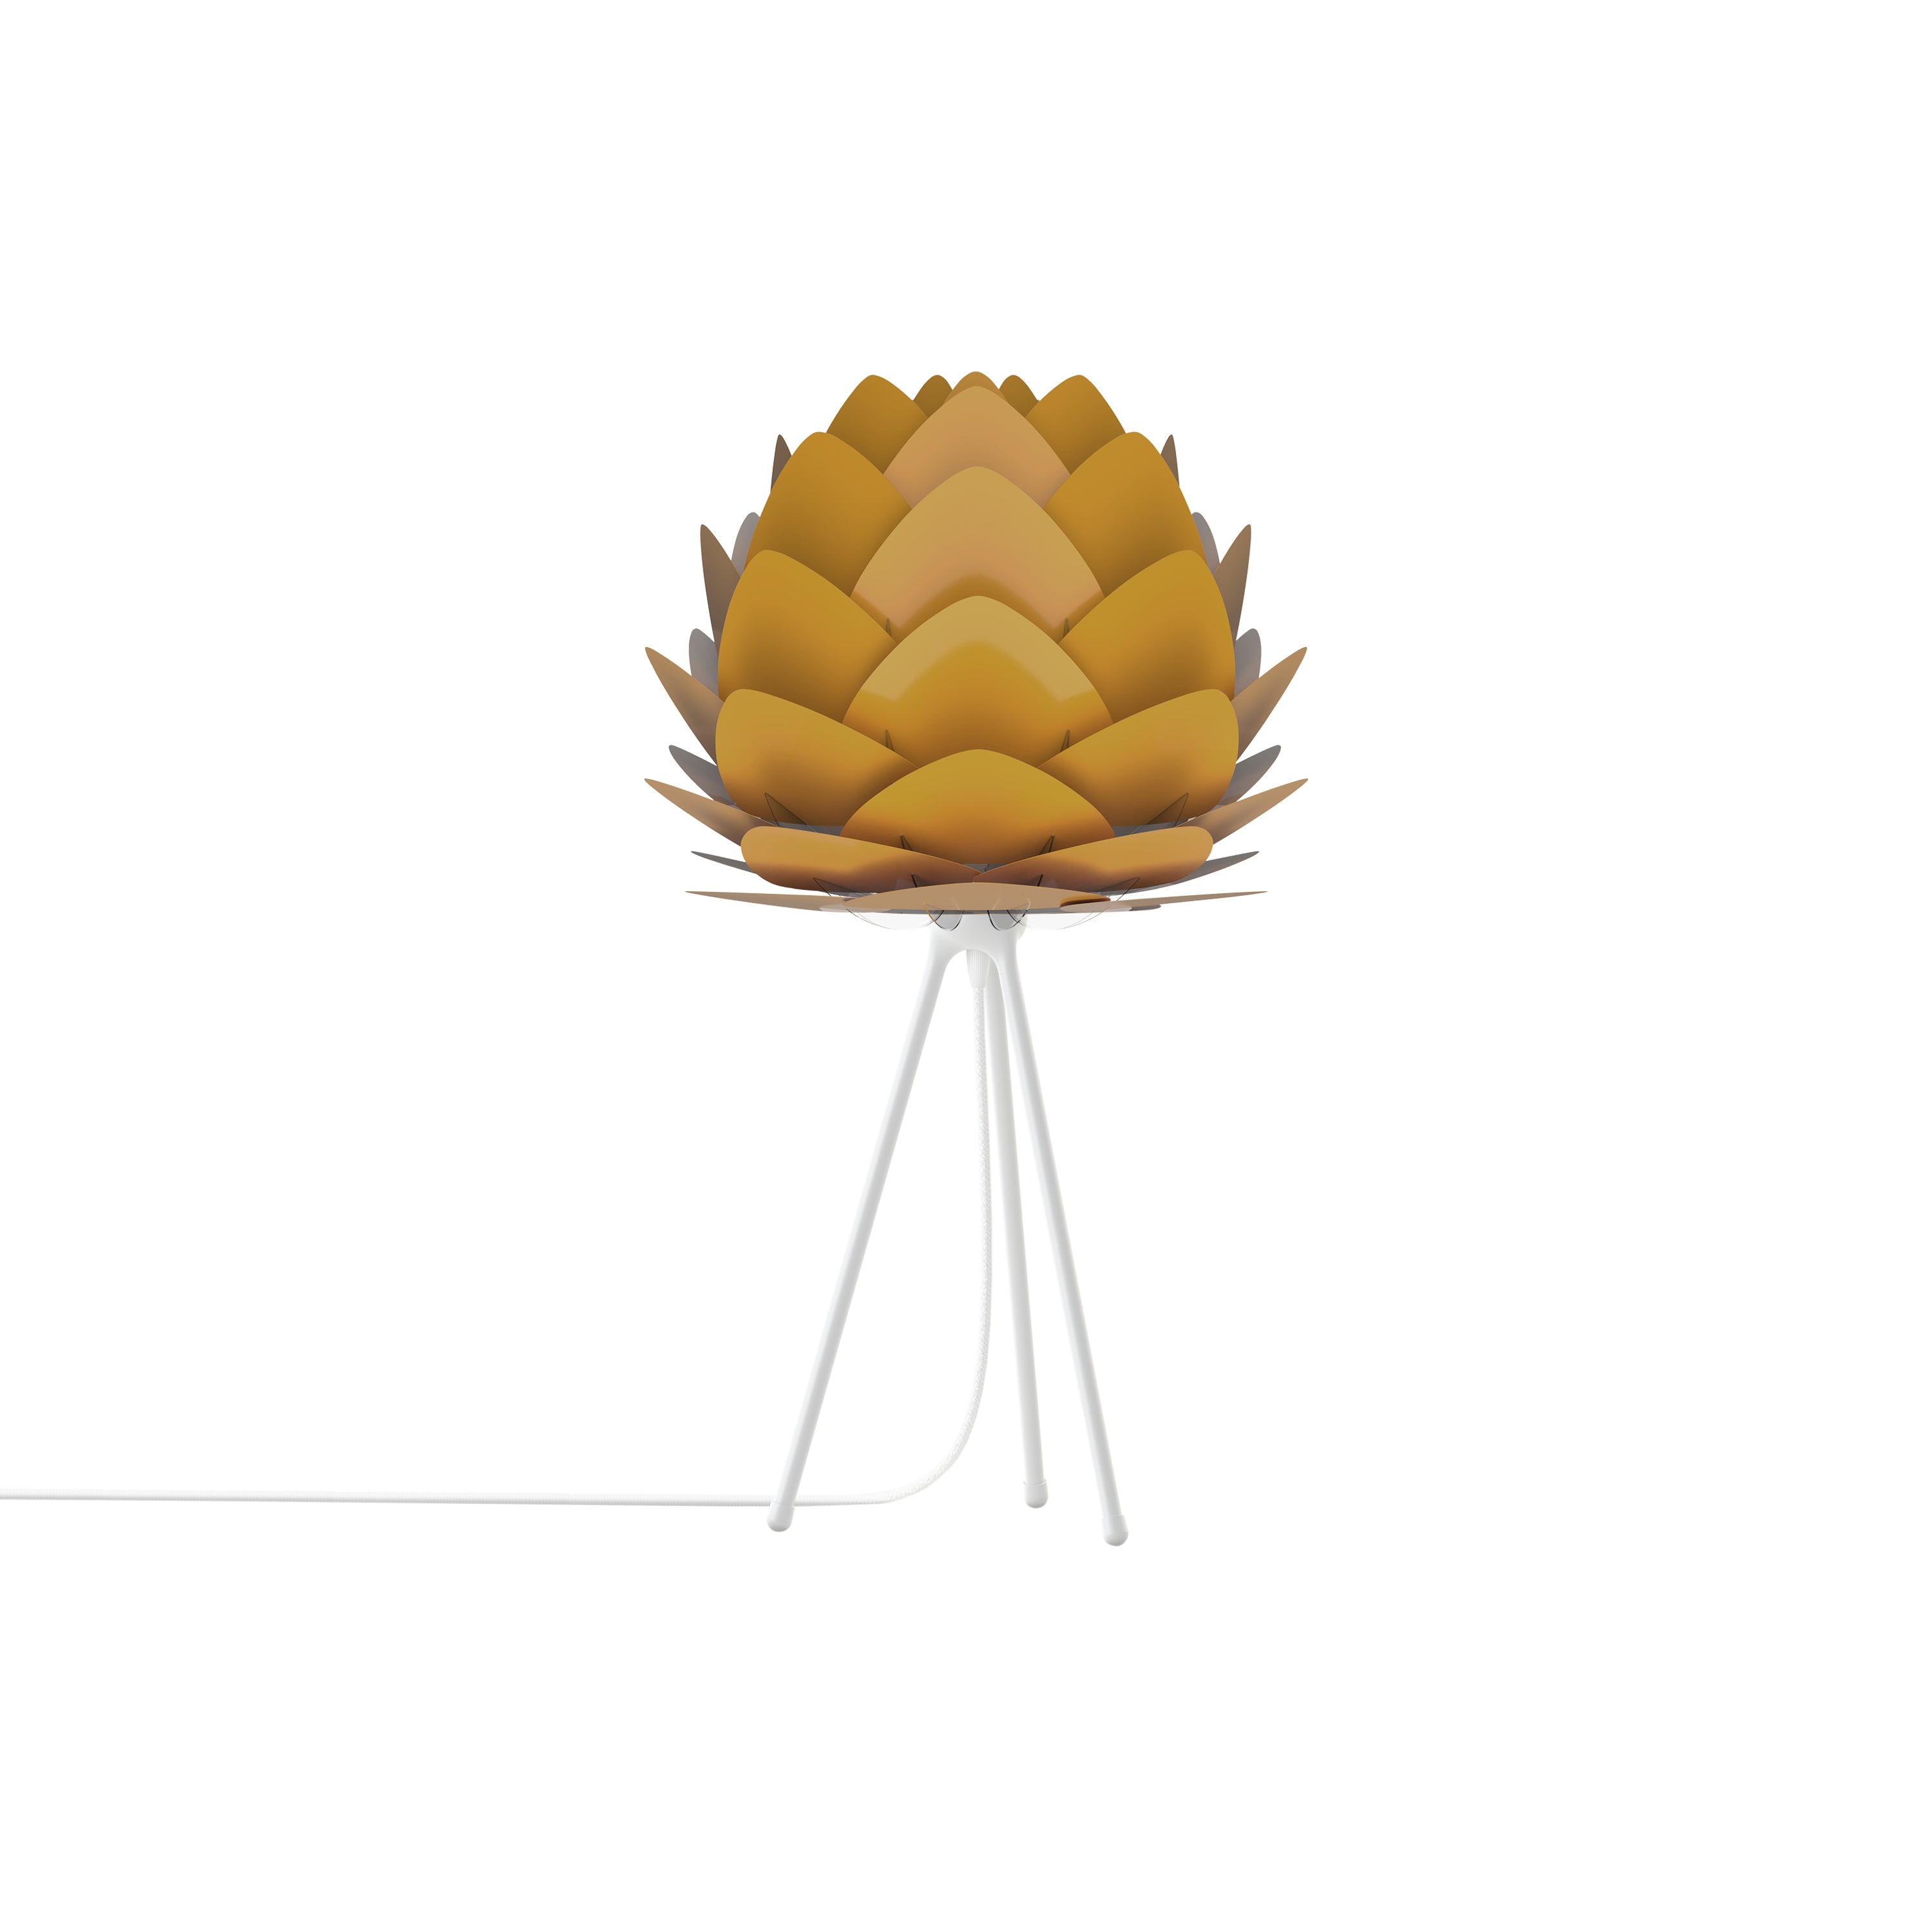 Aluvia Tripod Table Lamp: Medium - 23.3